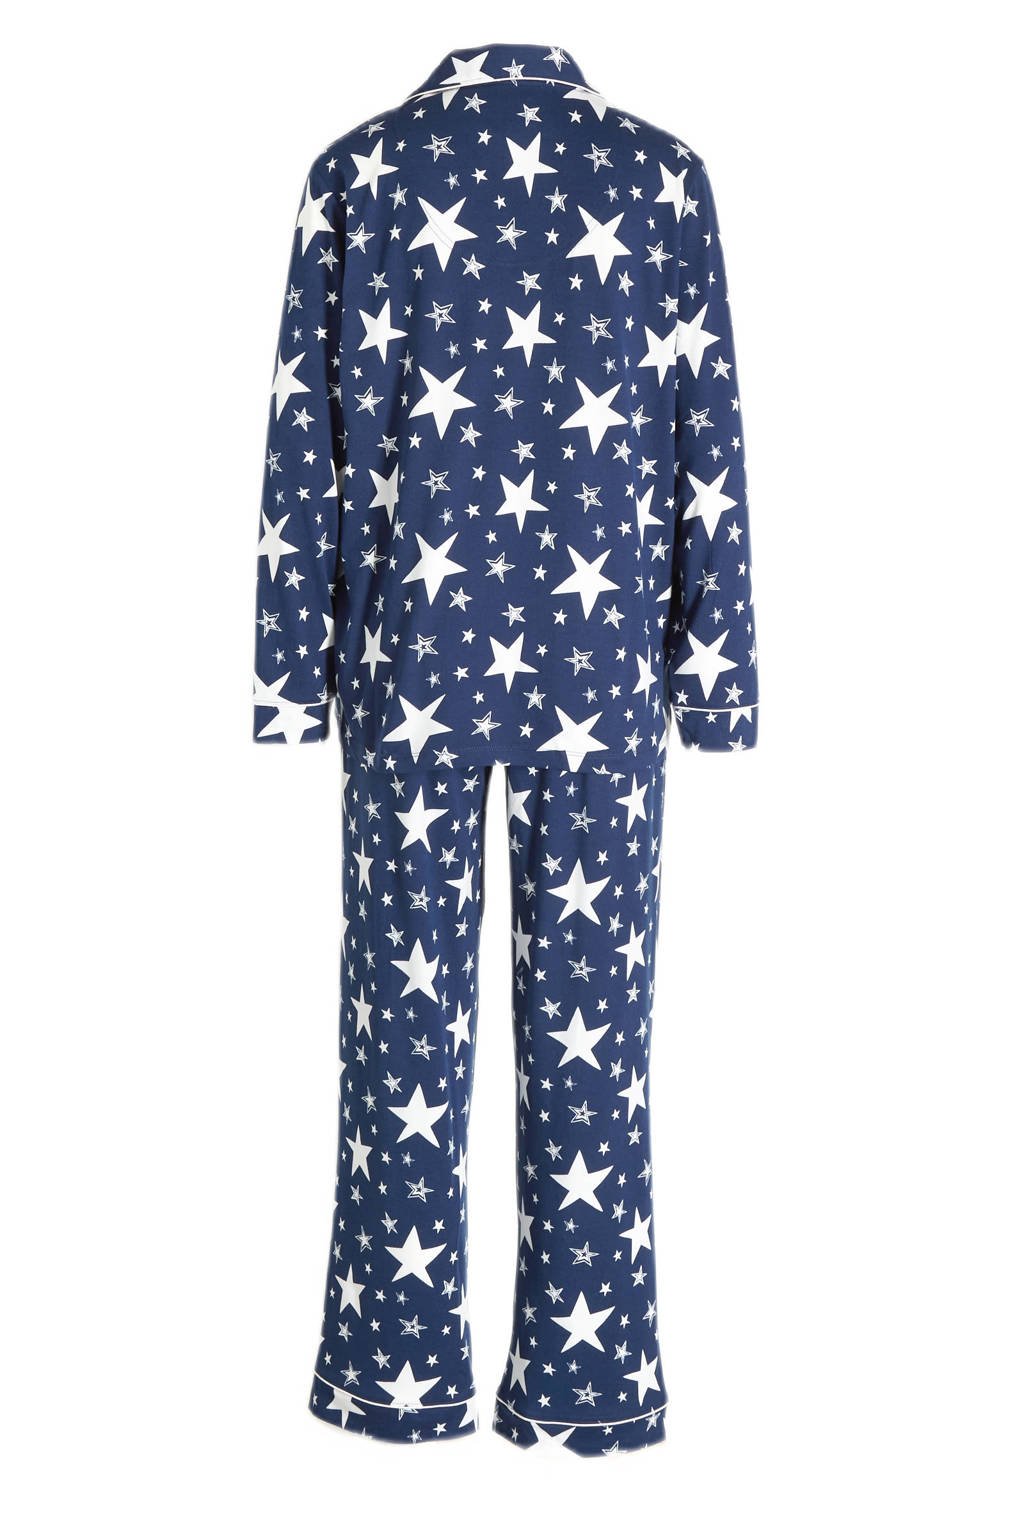 Chelsea Peers pyjama Sparkle Star met sterren print donkerblauw/wit, Donkerblauw/wit